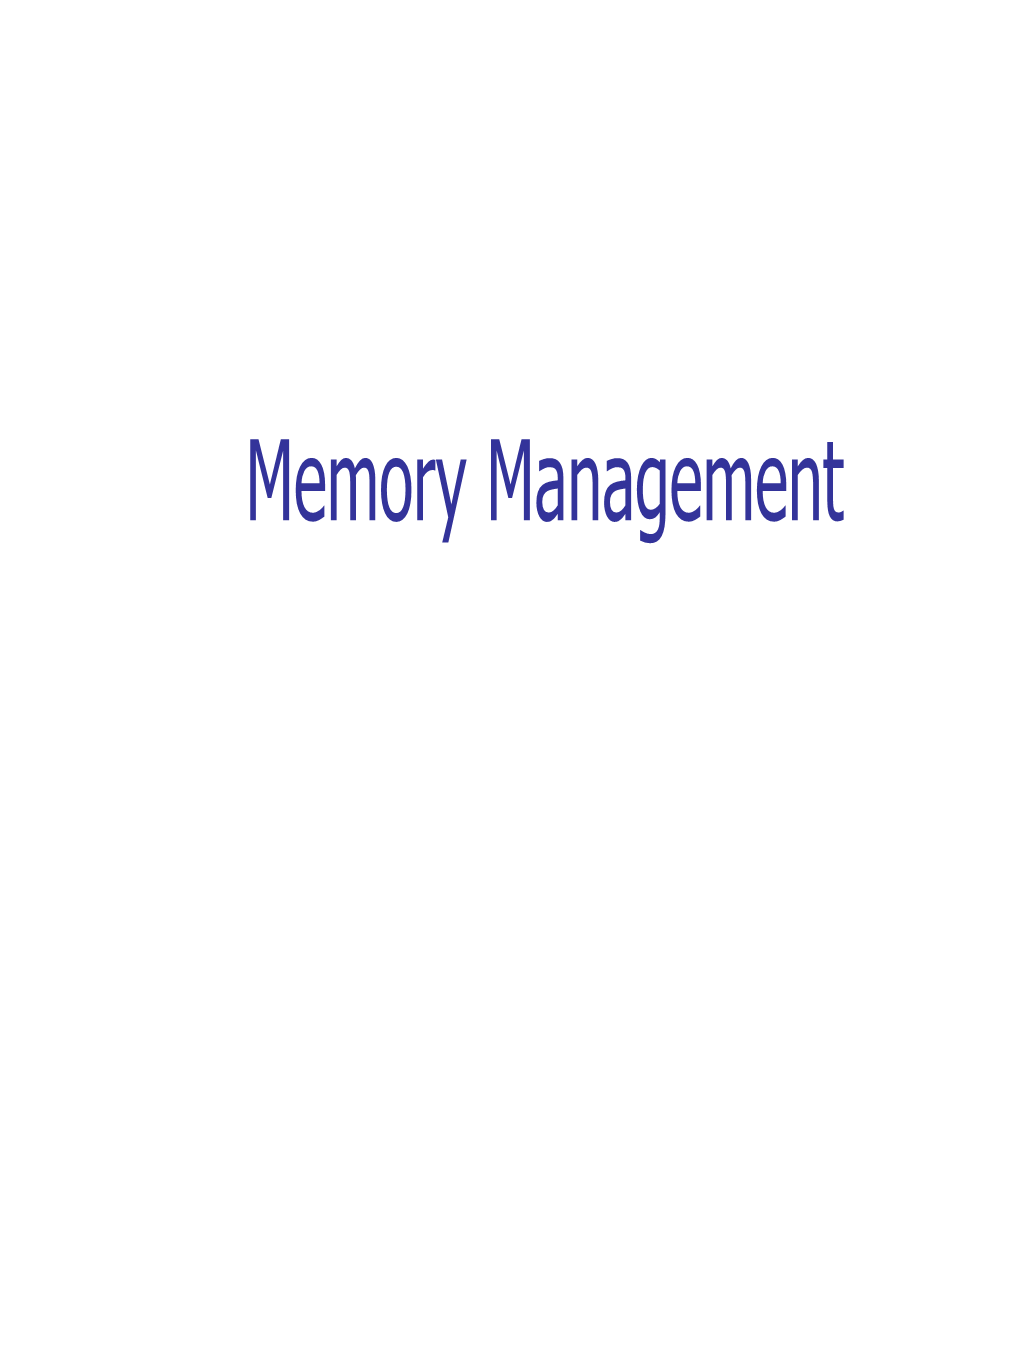 Memory Management Memory Management